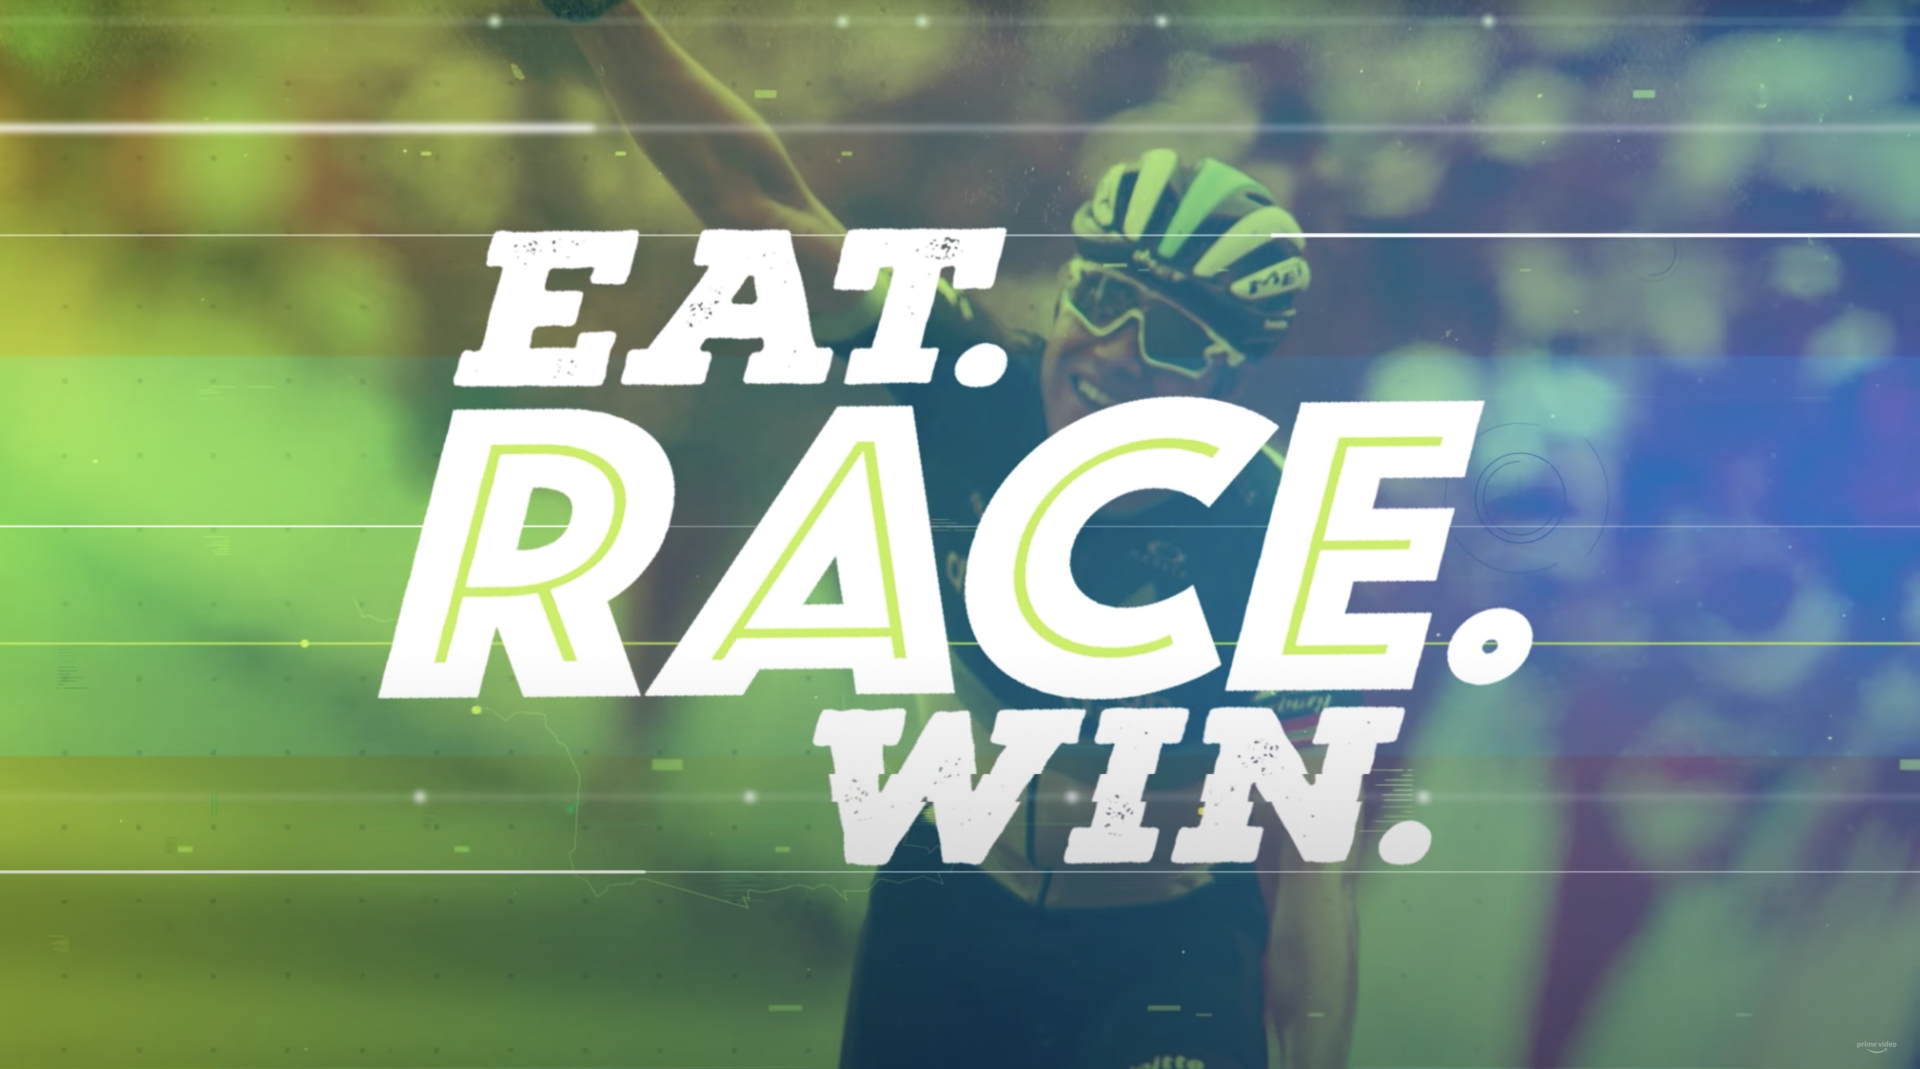 Les Rookies - Eat, race, win